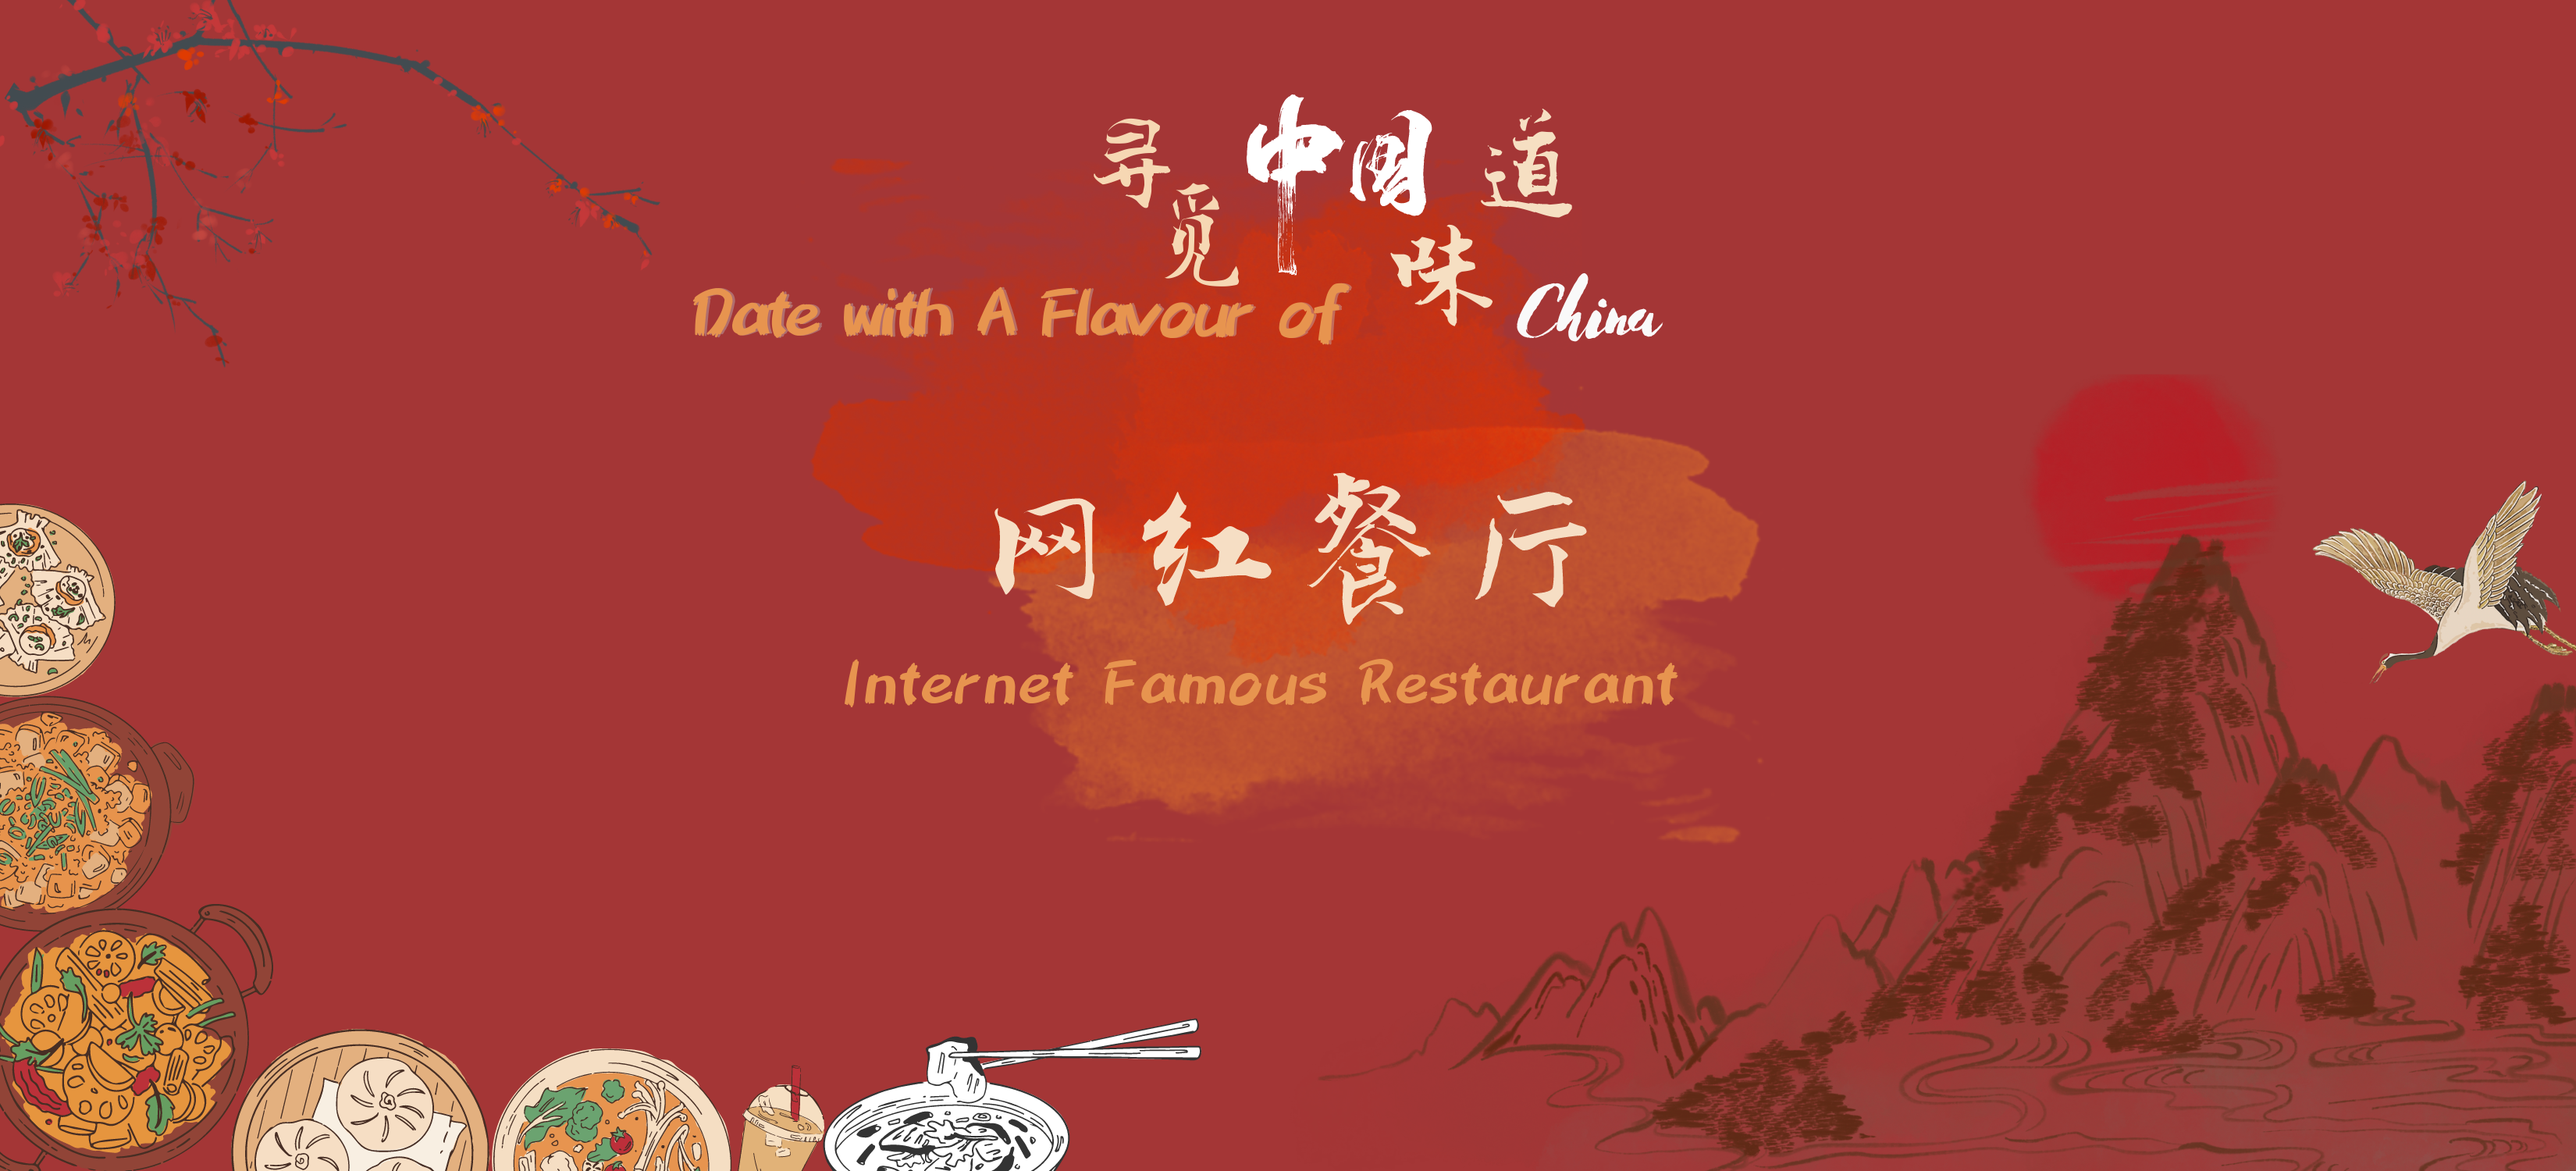 Internet Famous Restaurant